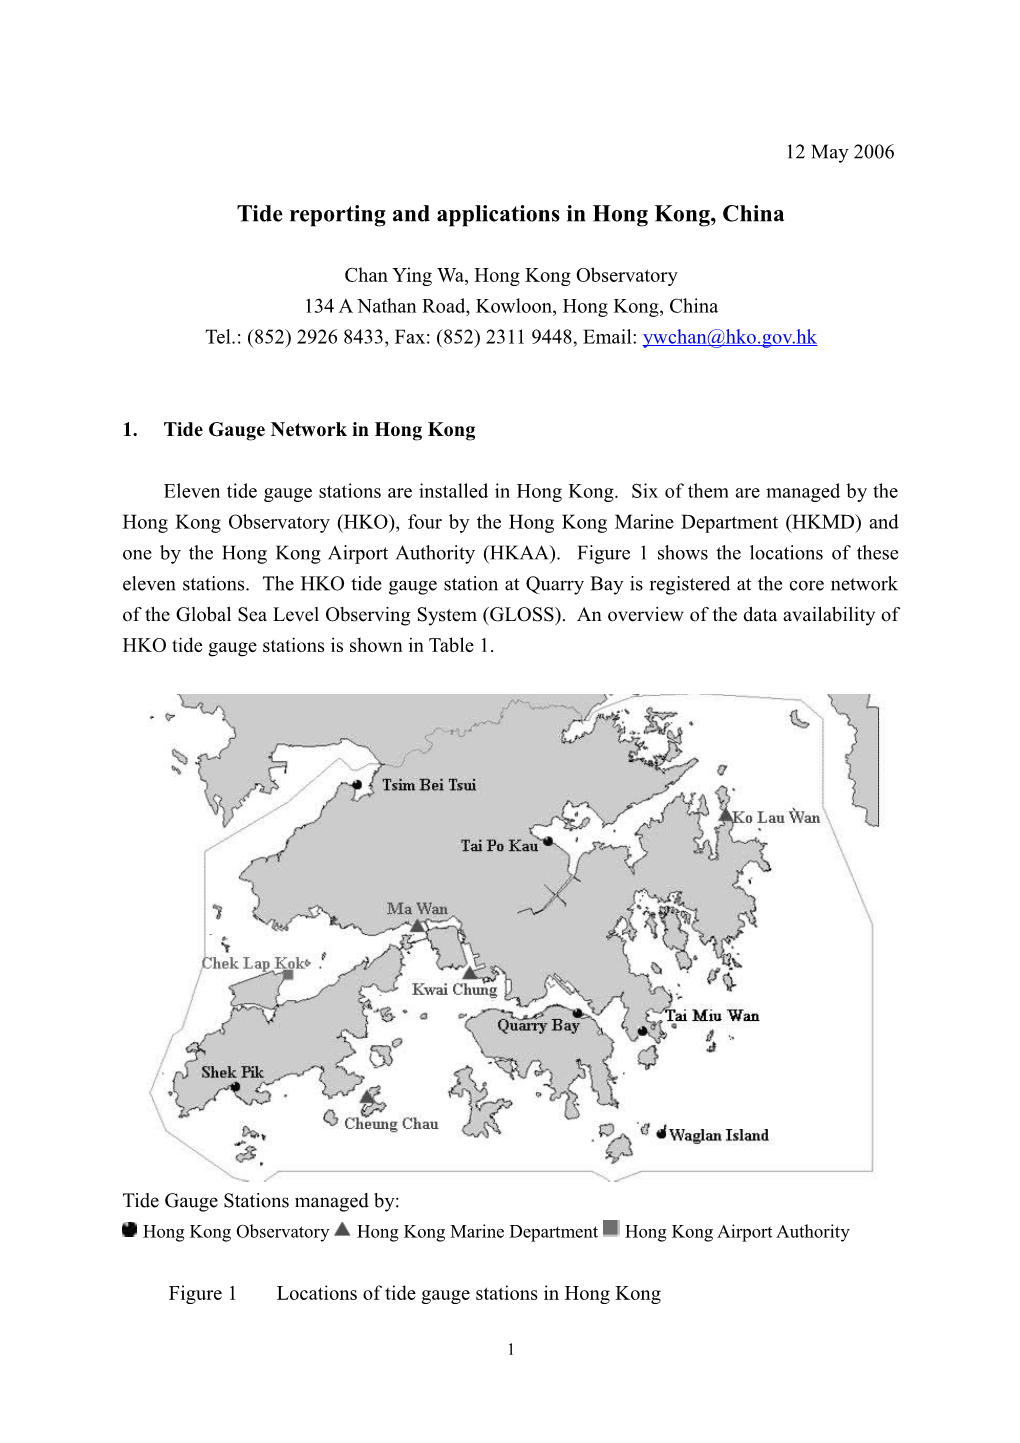 Tide Reporting and Applications in Hong Kong, China